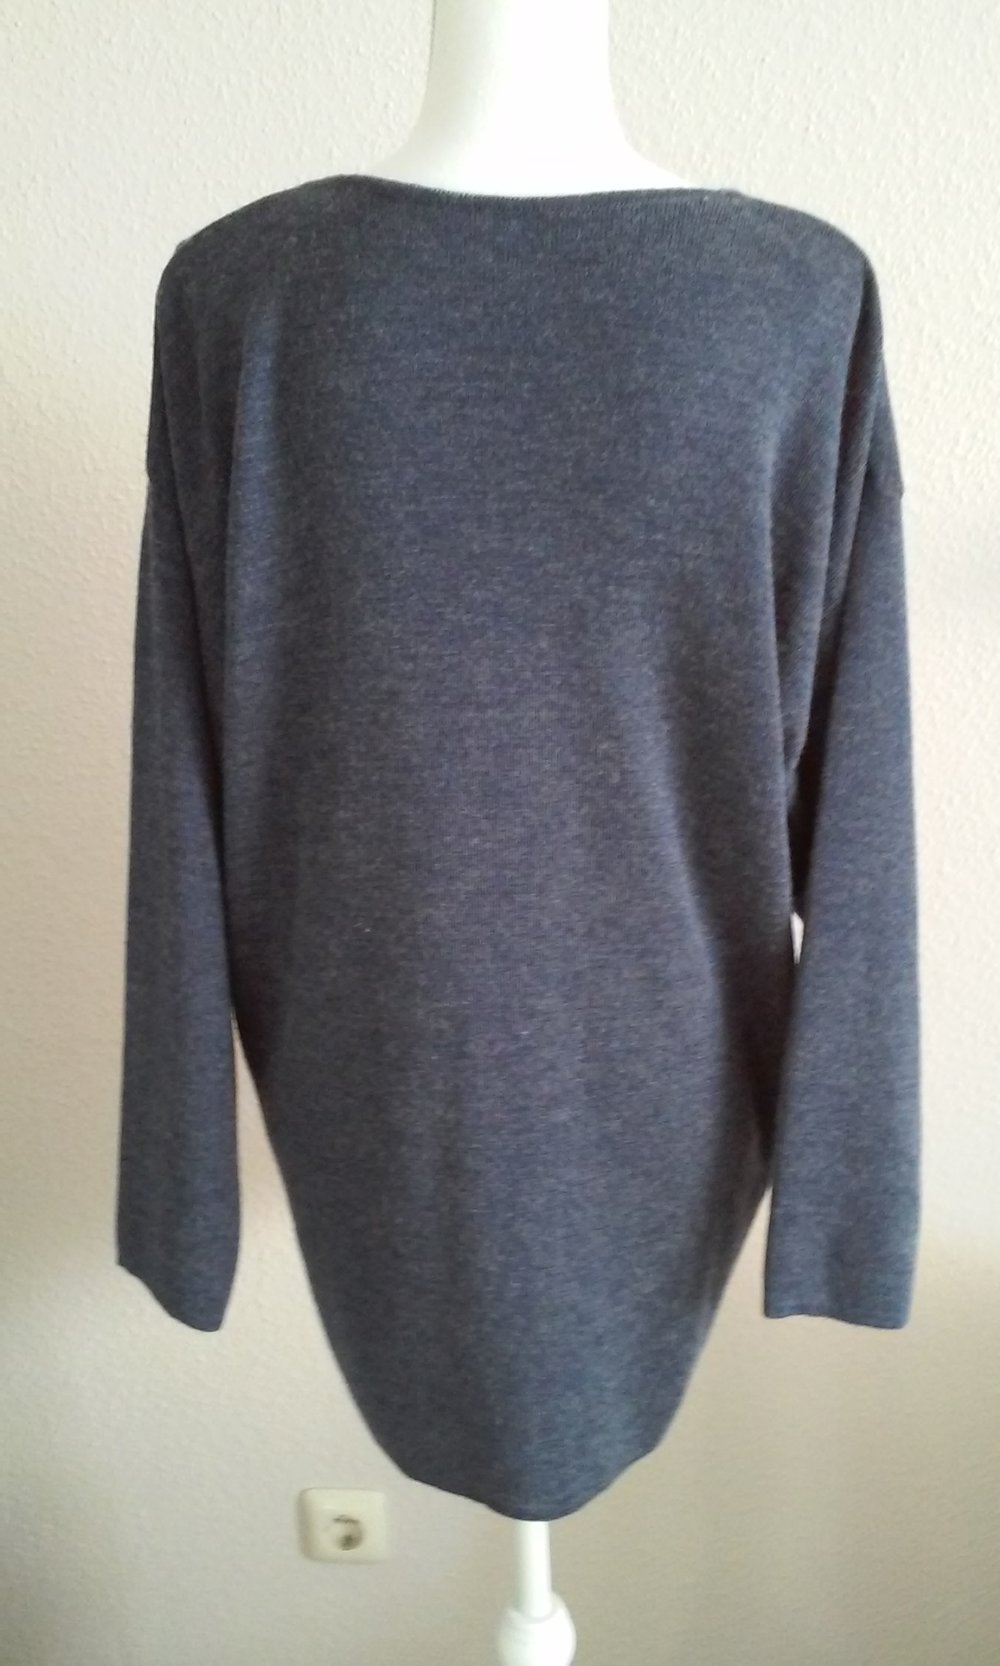  Sweater Sommer Pullover Pulli Wollpulli marine/Jeansoptik, langärmlig, Rundhals